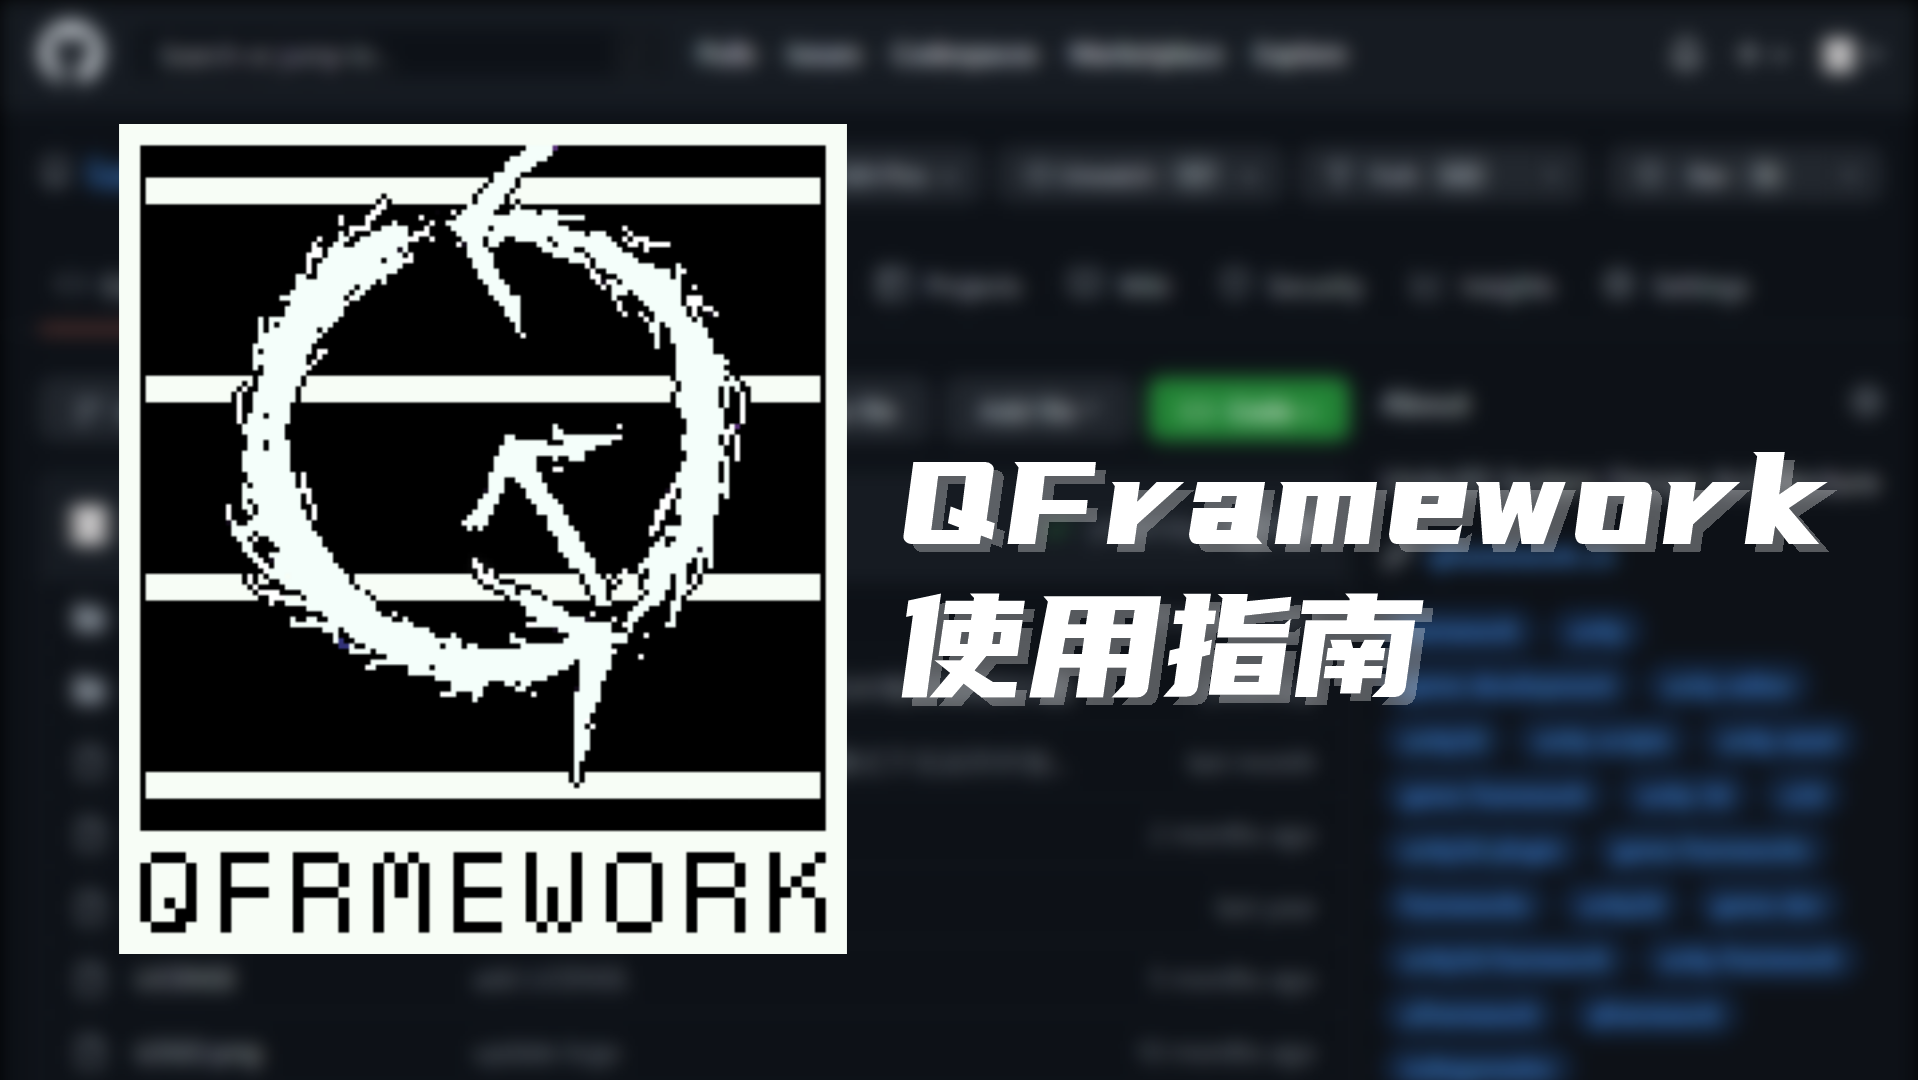 【Unity 框架】QFramework v1.0 使用指南 工具篇：02. 下载与安装 | Unity 游戏框架 | Unity 游戏开发 | Unity 独立游戏 